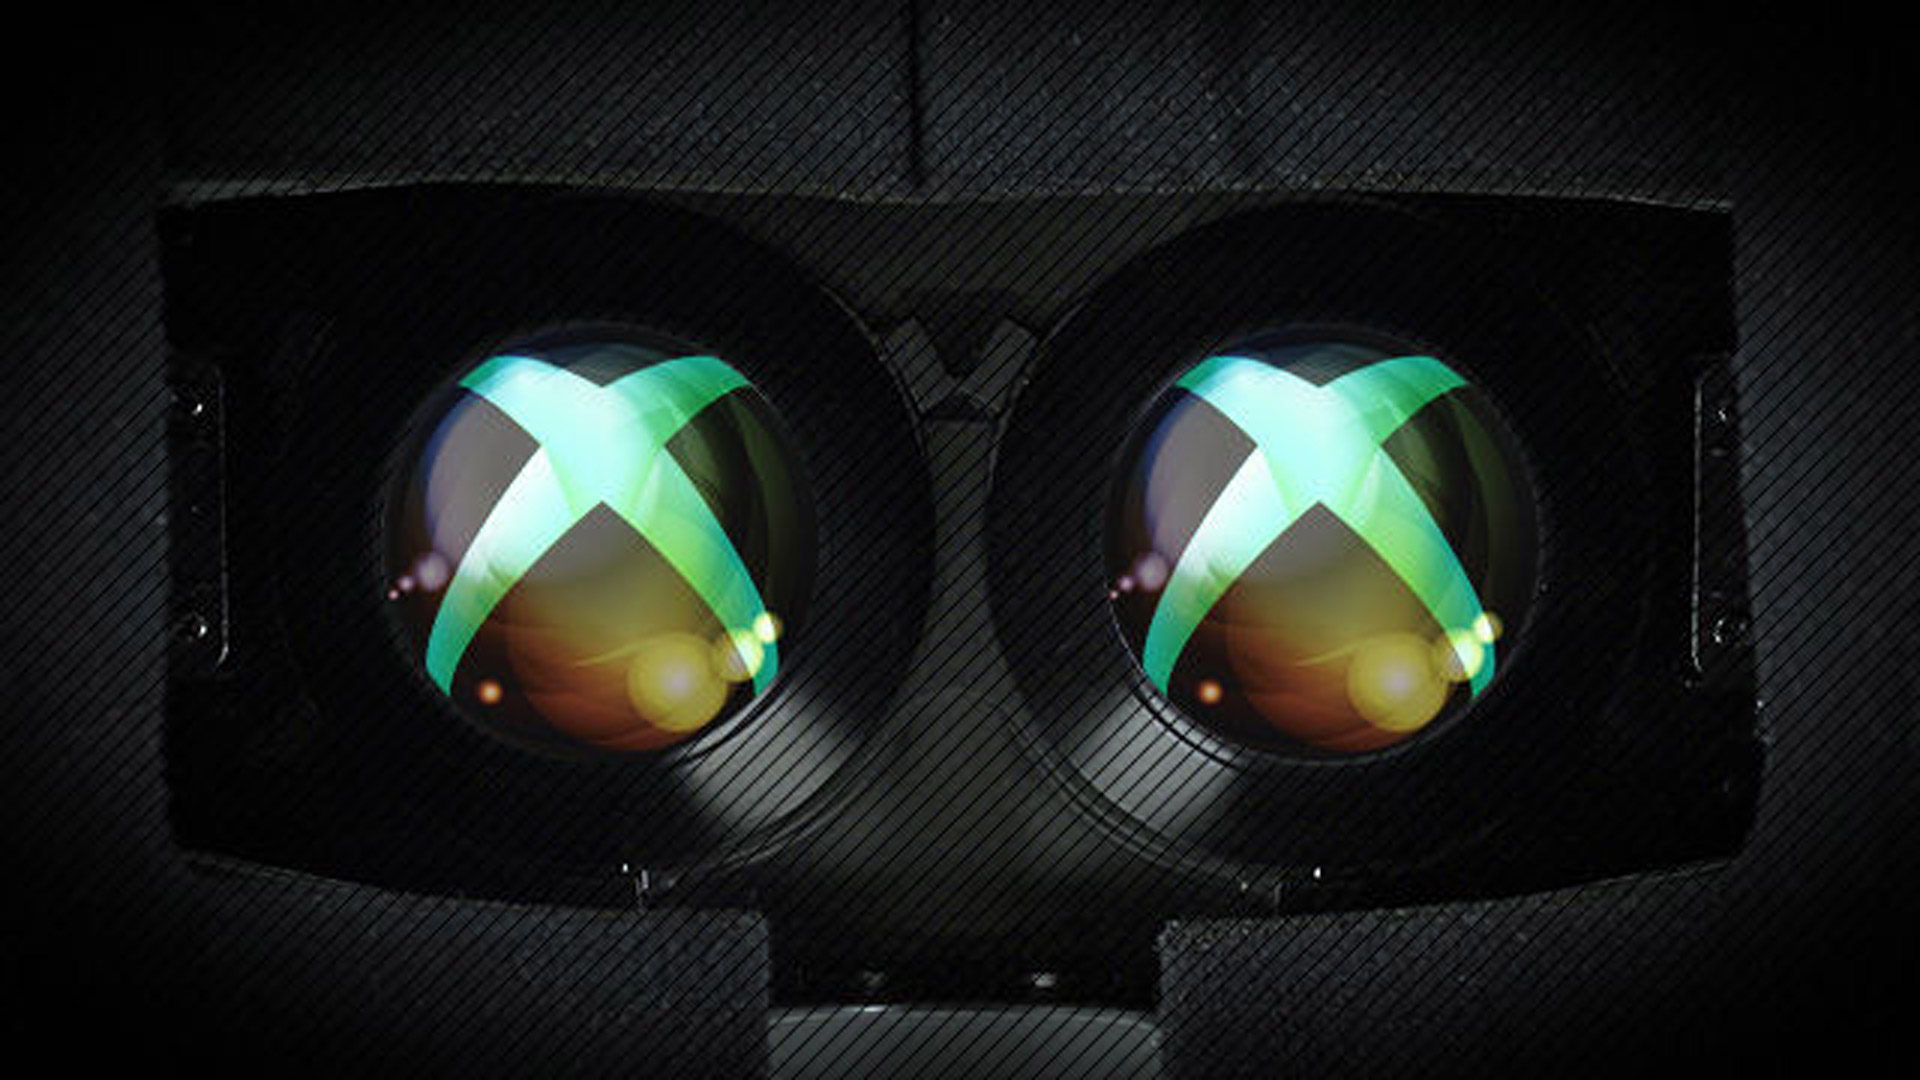 kiem Vegen Chaise longue PlayStation VR Cinematic Mode Apparently Works on Xbox One & Wii U - VRScout